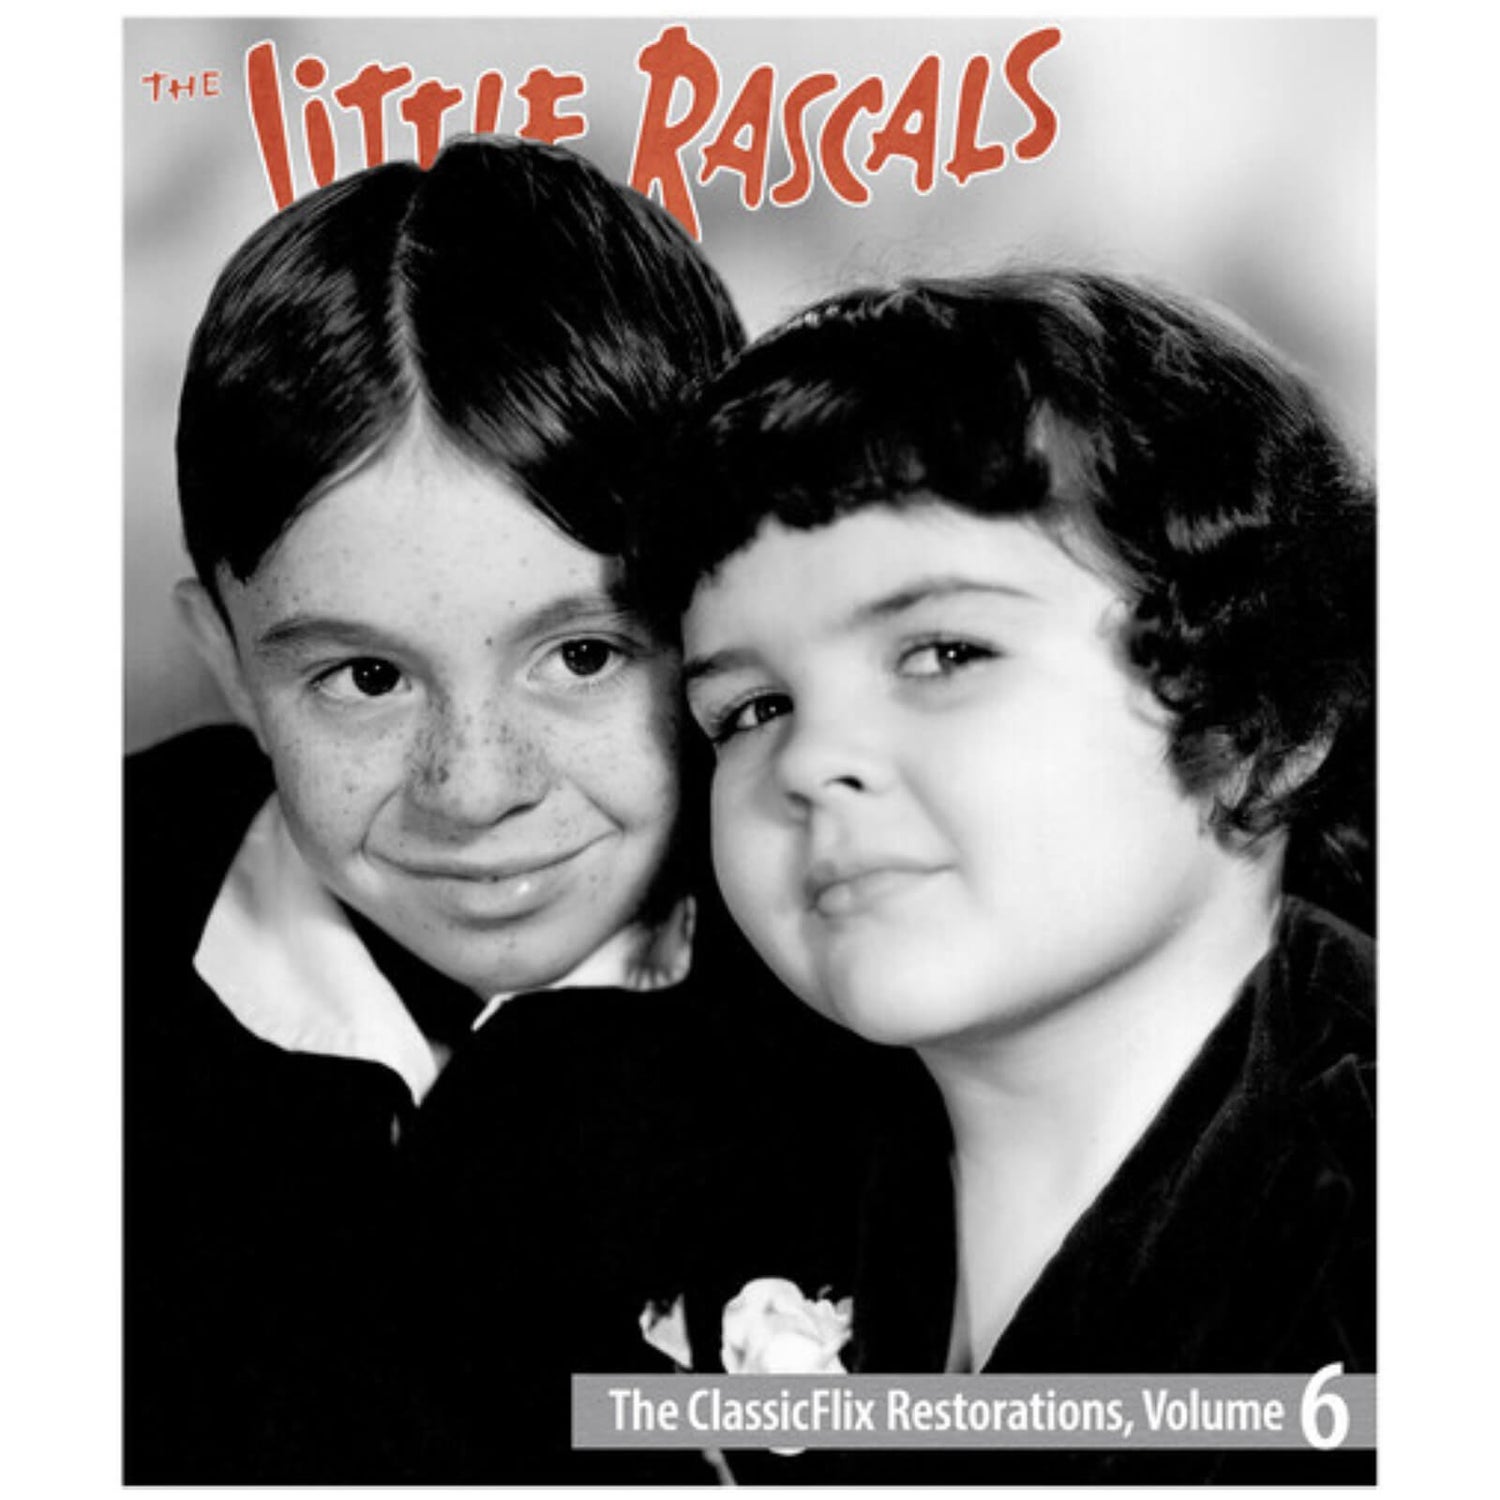 The Little Rascals: The ClassicFlix Restorations, Volume 6